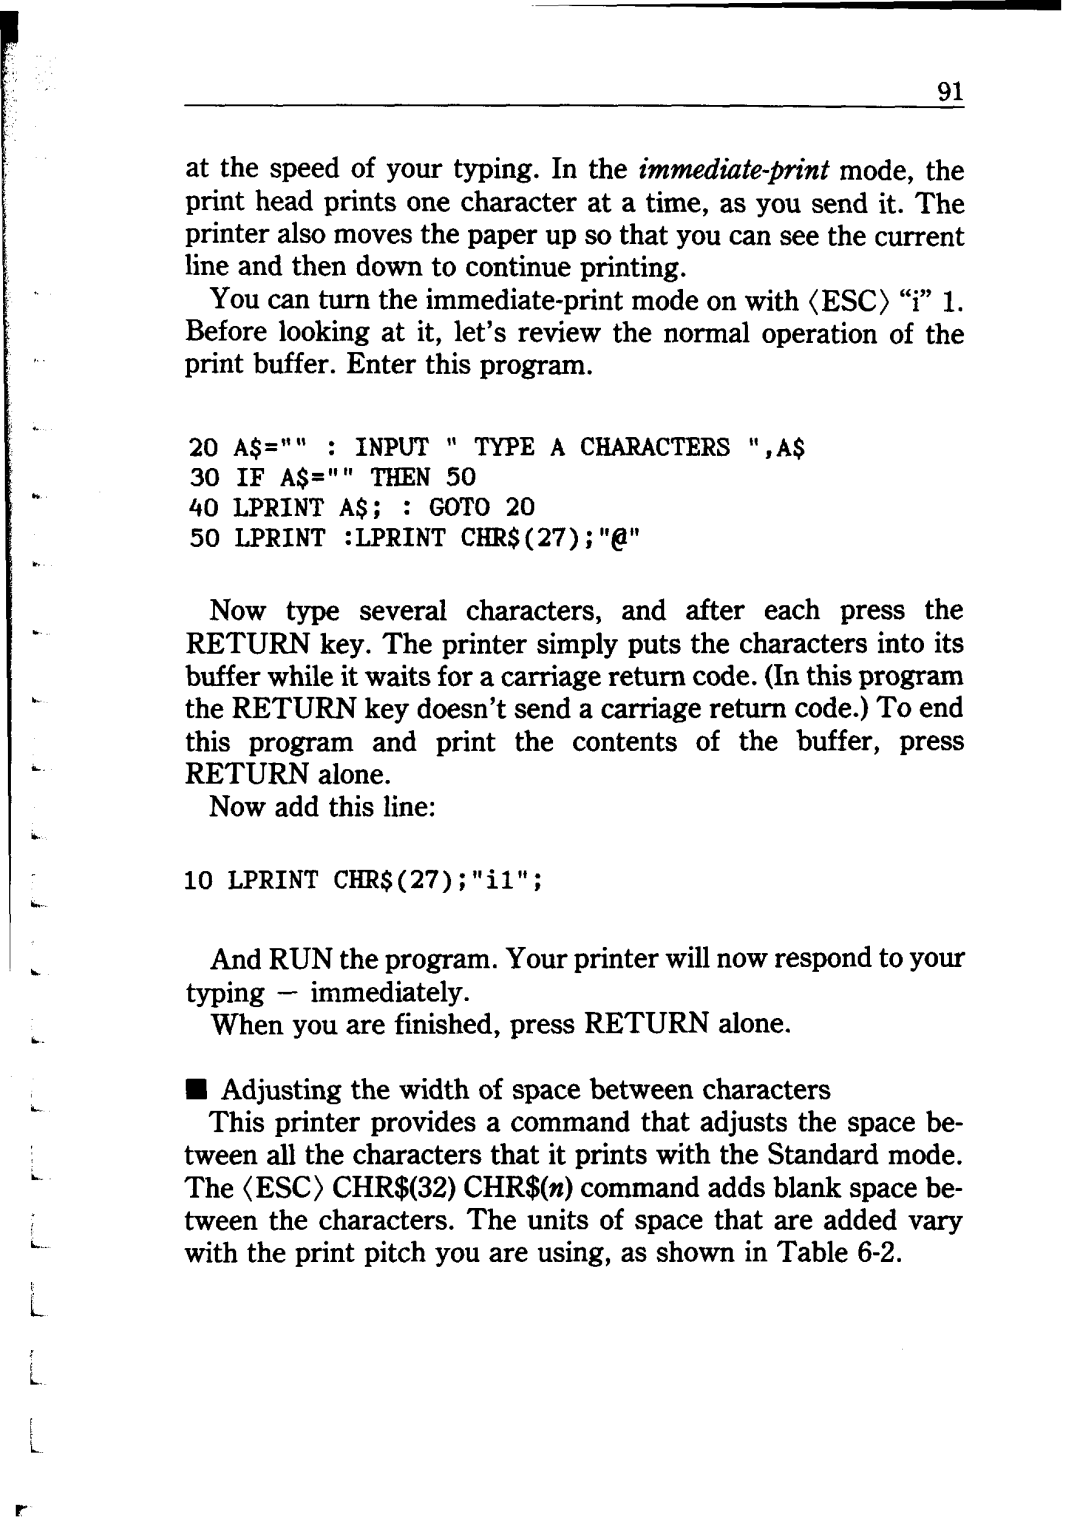 Star Micronics NB24-10/15 user manual 20 A$= INPUT TYPE A CHARACTERS,A$ 30 IF A$= THEN 40 LPRINT A$ GOT0 